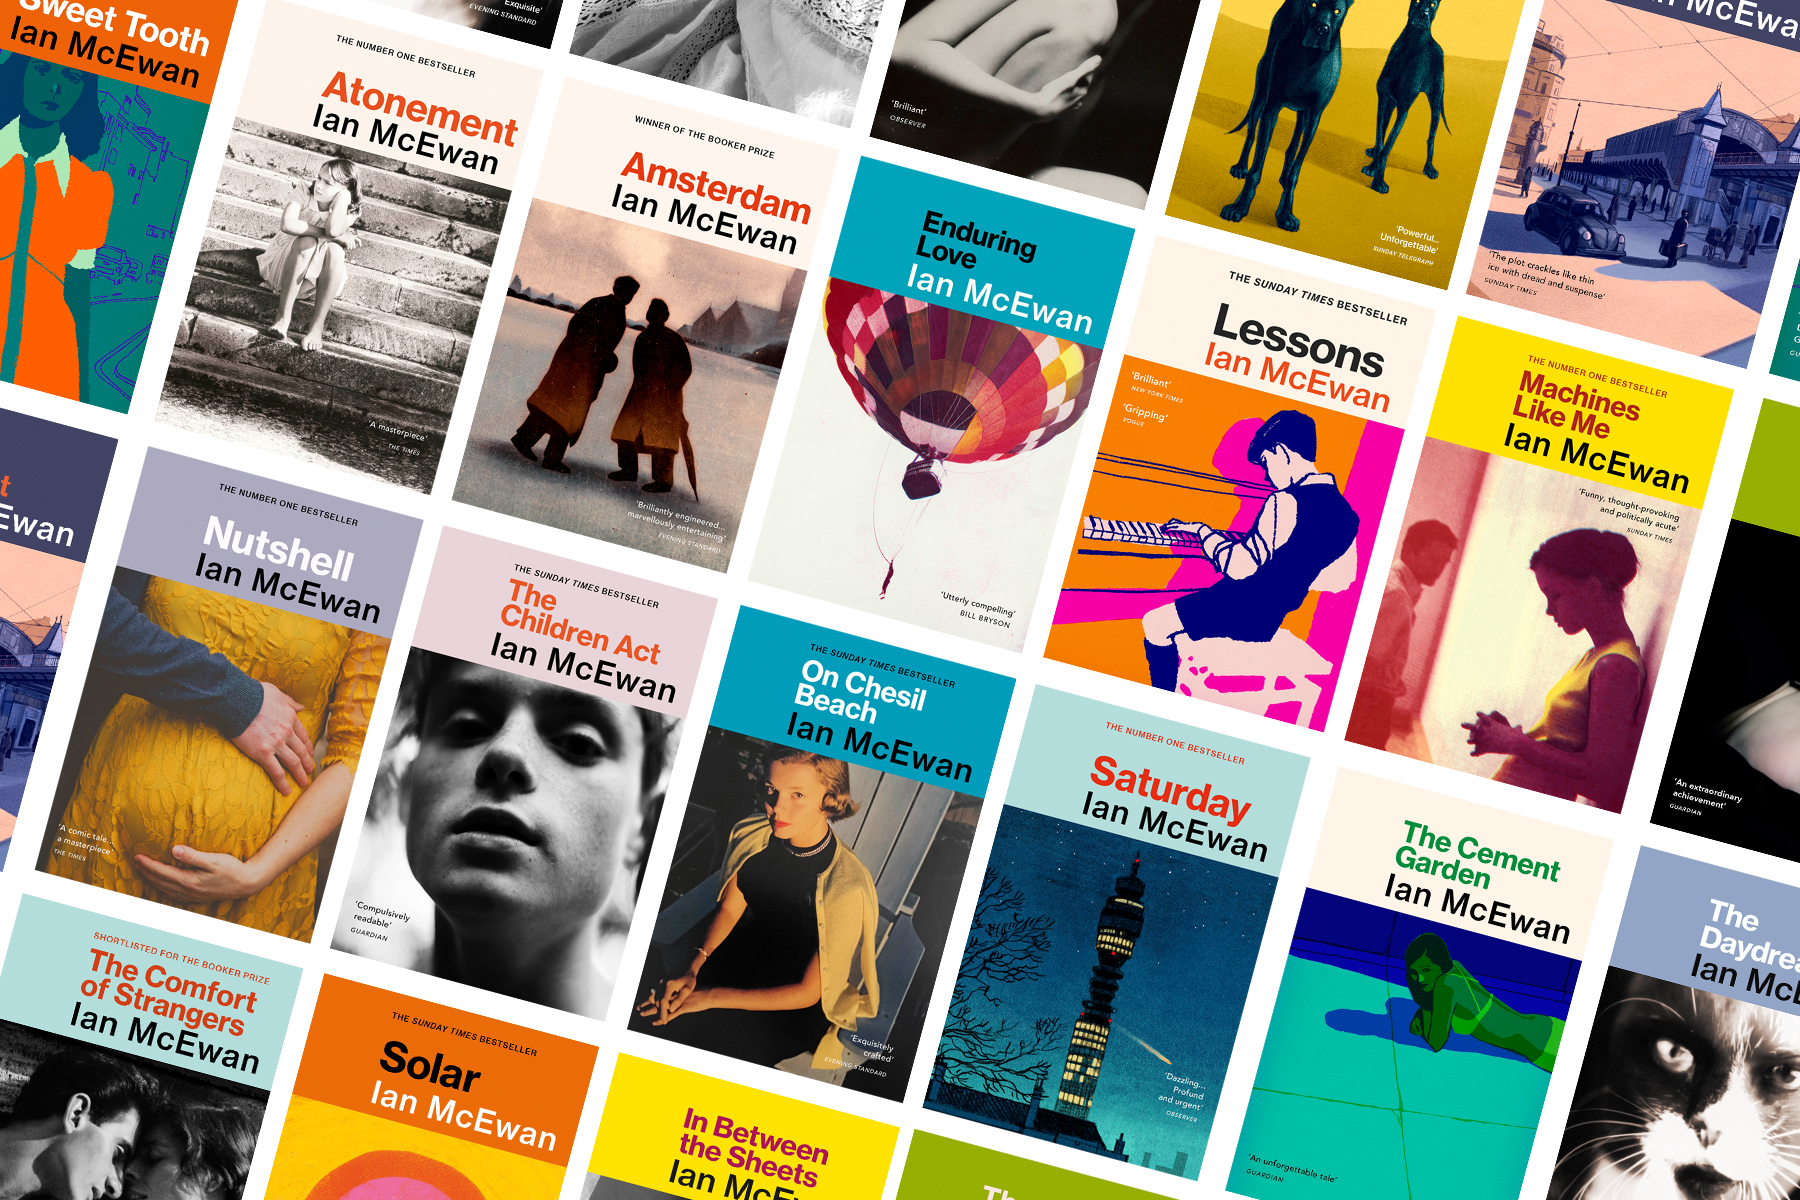 Ian McEwan book covers in a grid format